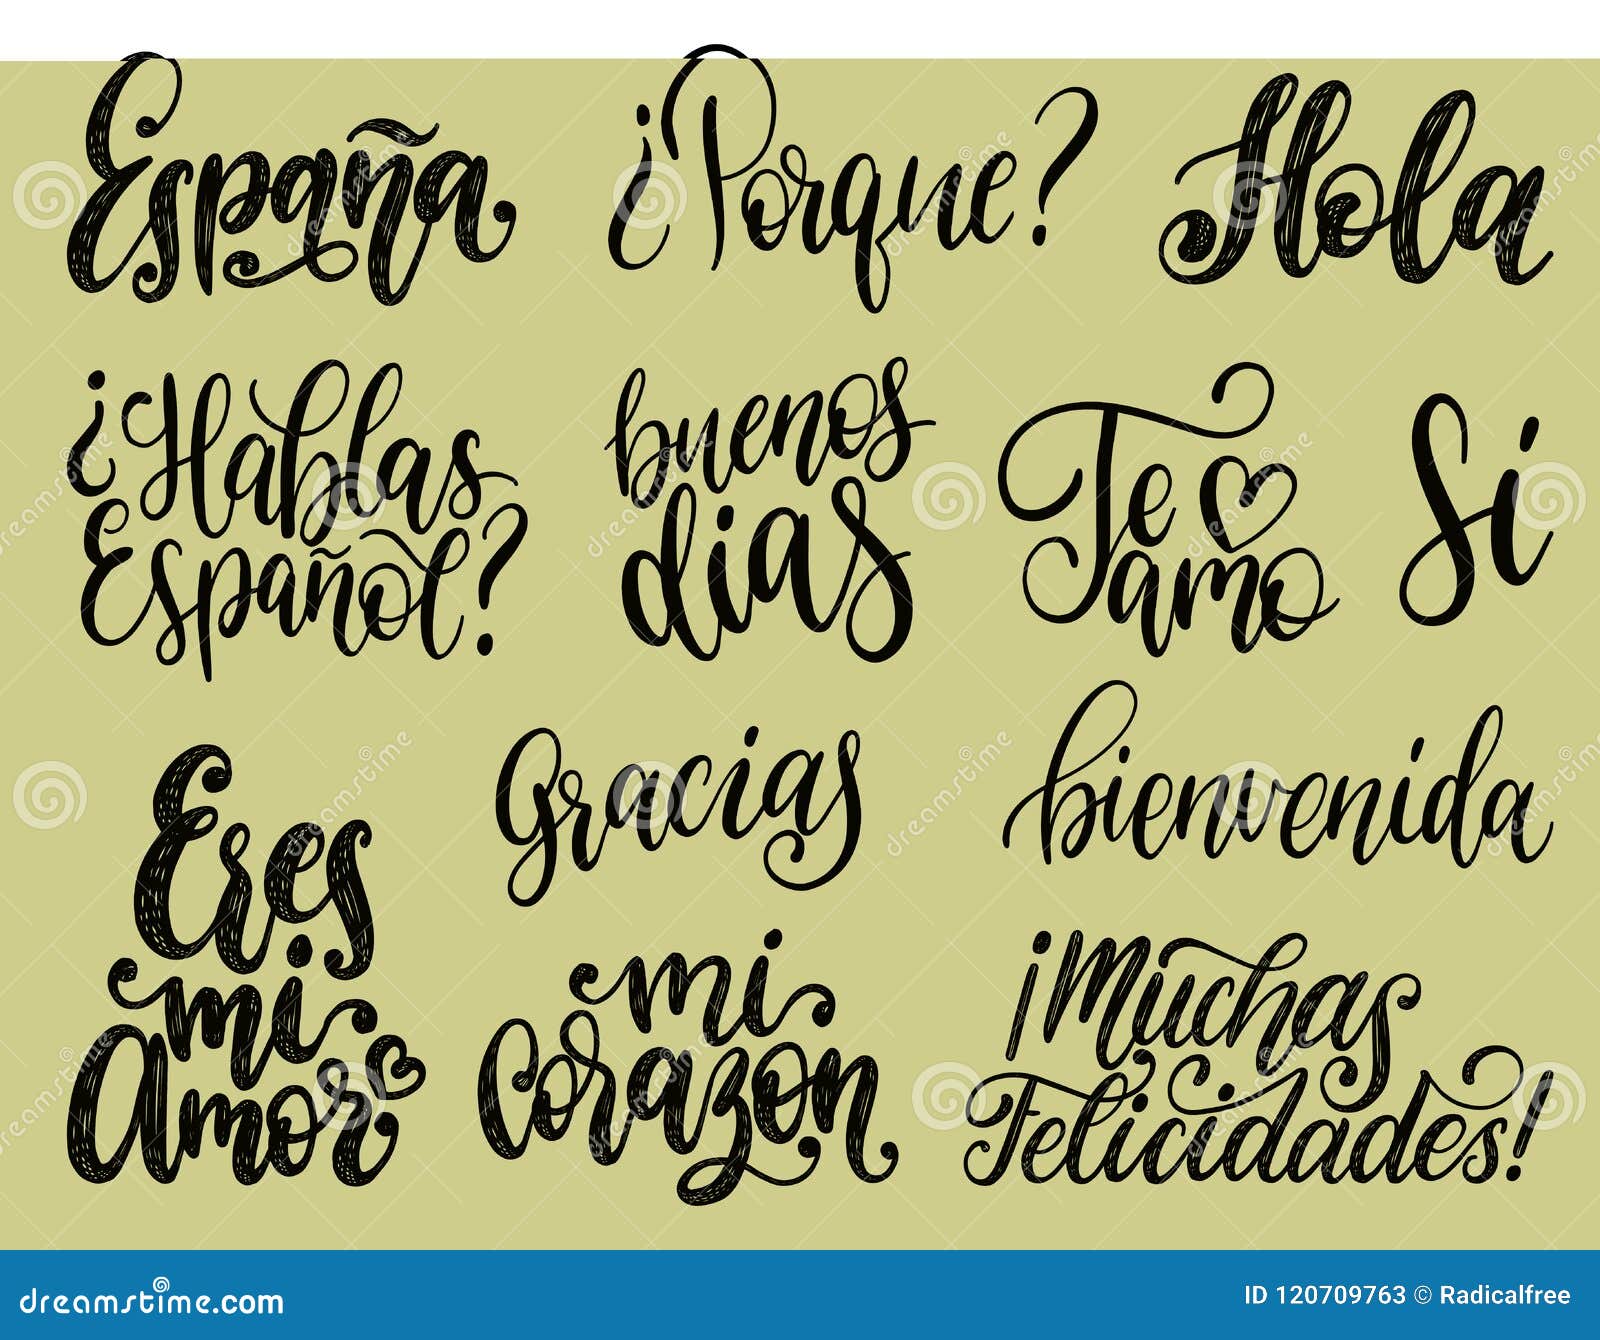 bienvenida, hola, gracias, espana translated from spanish handwritten phrases welcome, hello, thank you, spain etc.